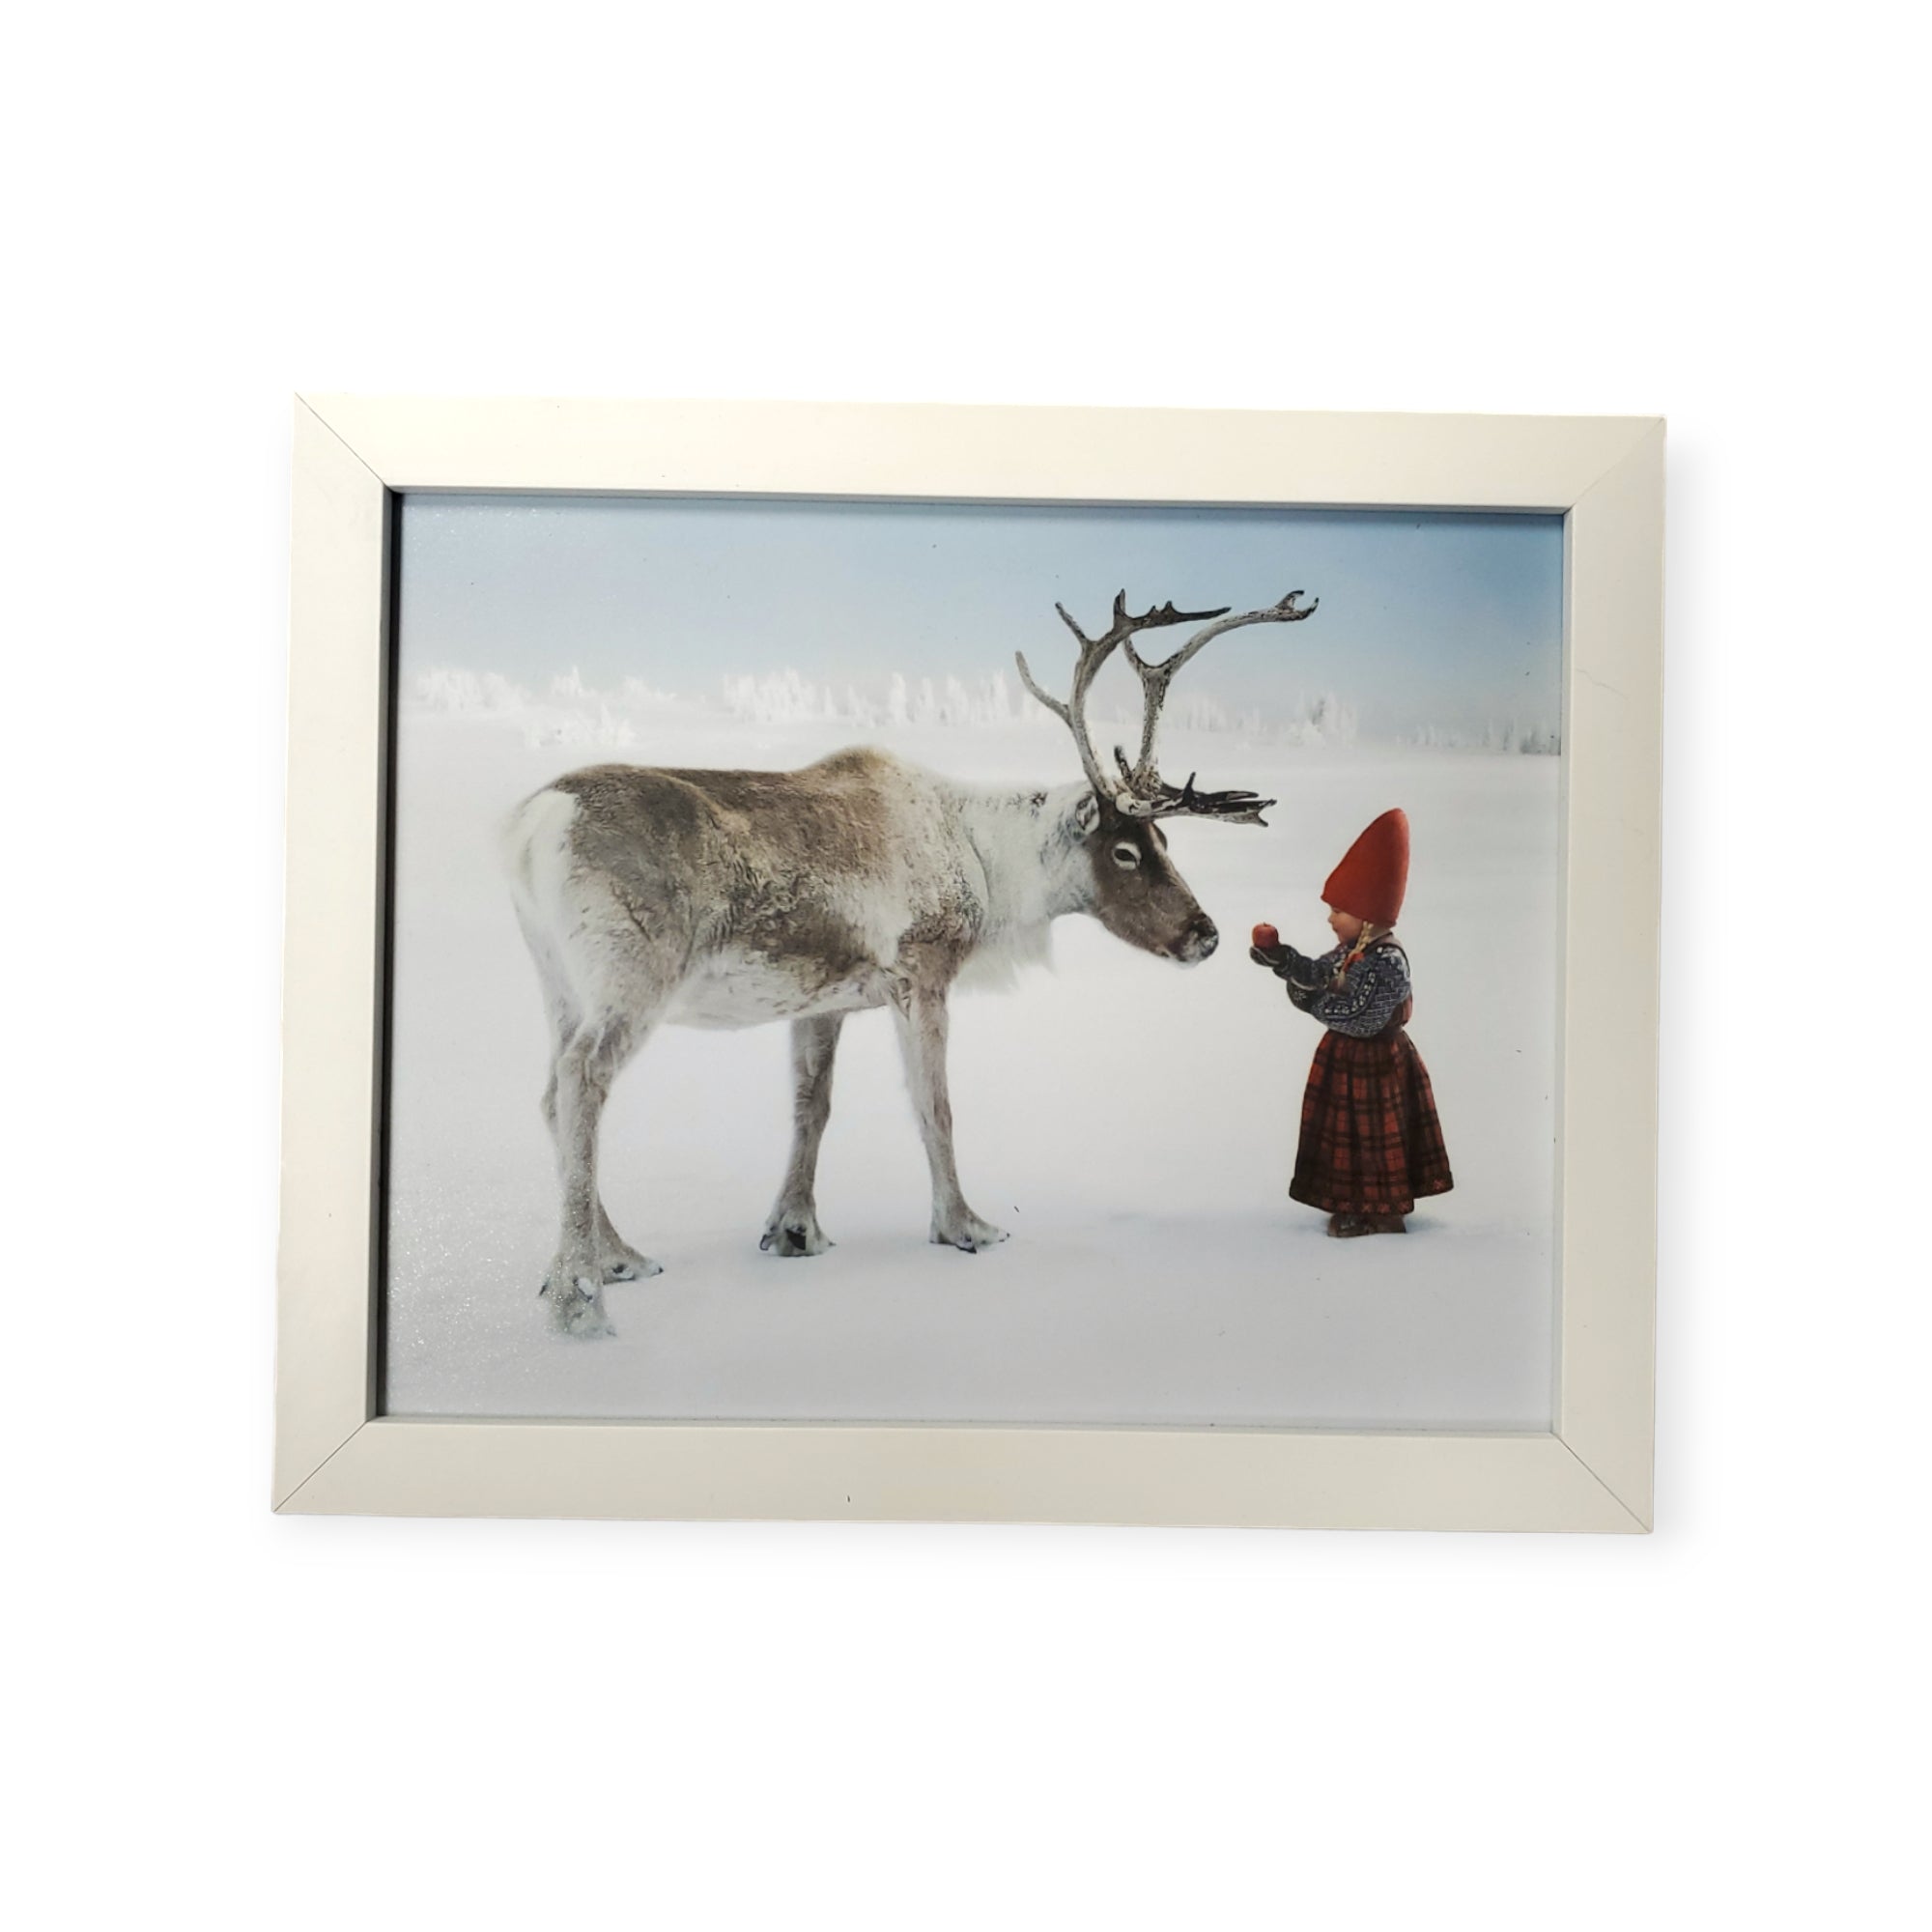 Artwork: Anja with Reindeer - Christmas Wish